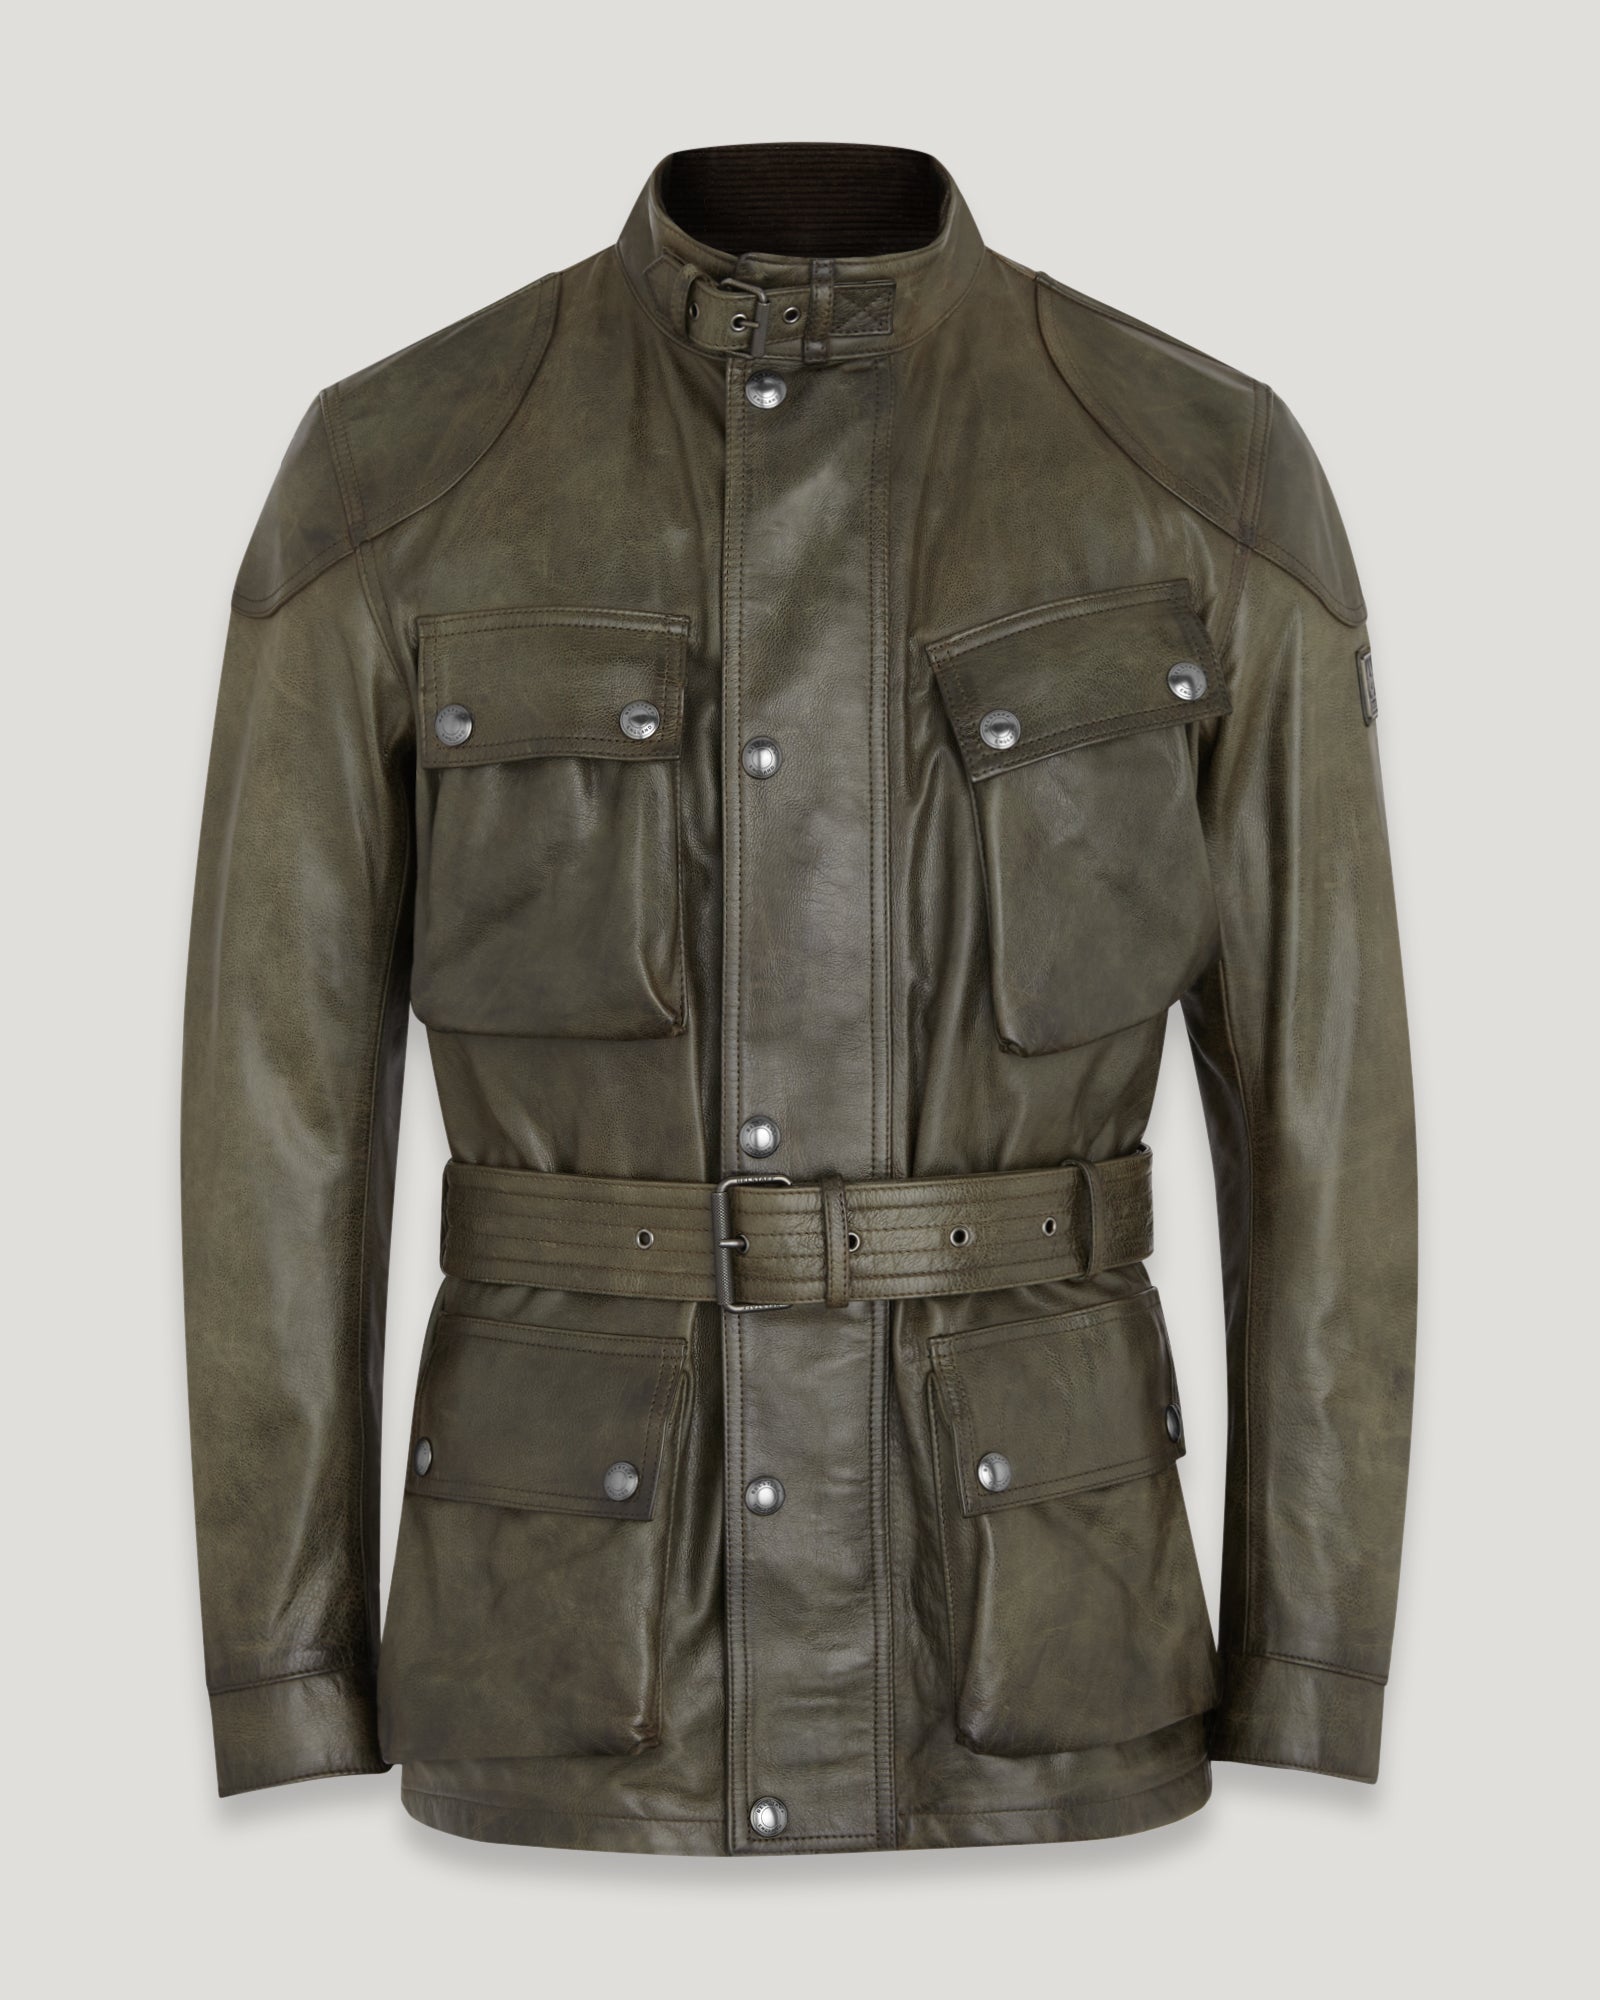 Trialmaster Panther 2.0 Jacket in Dark Green| Men's Leather Jackets ...